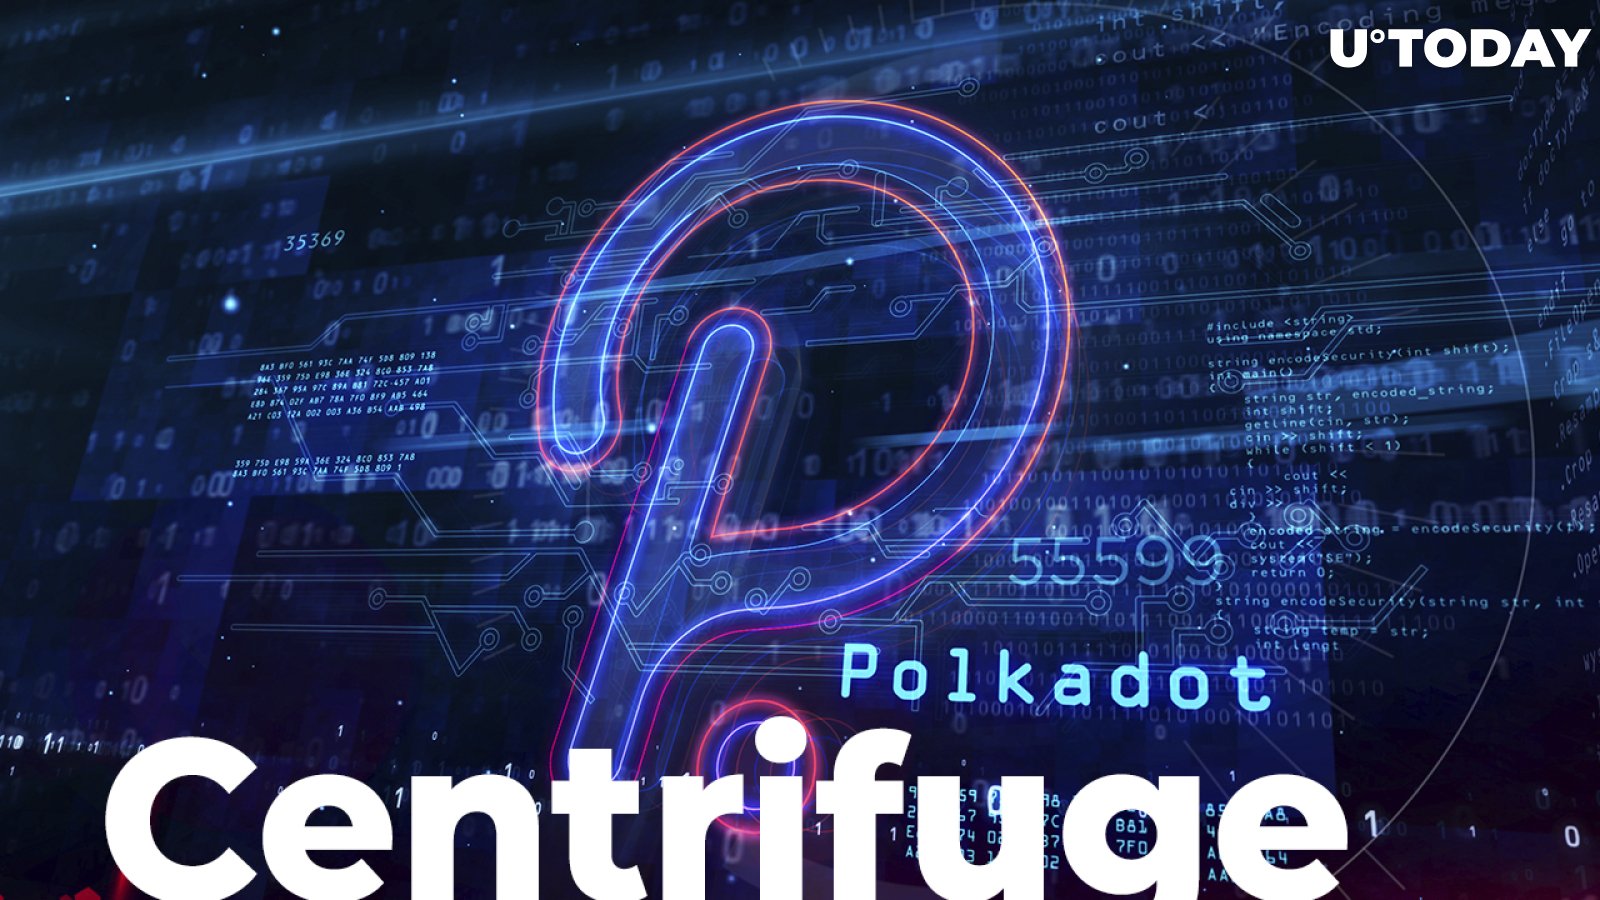 Centrifuge Secured Polkadot's Parachain Slot, Announces Acala and Moonbeam Integrations